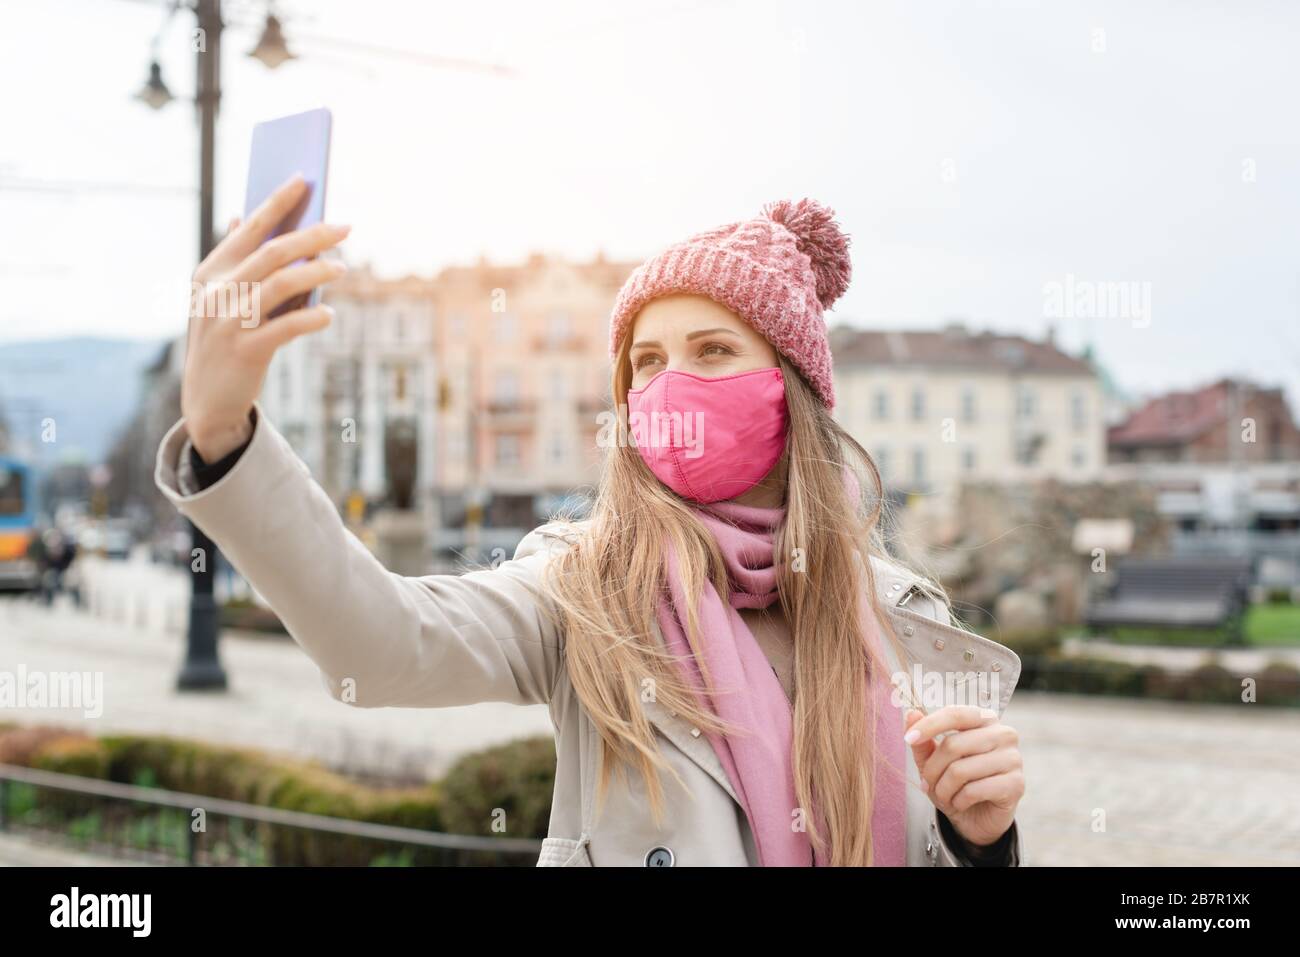 Woman wearing corona mask making selfie with phone Stock Photo